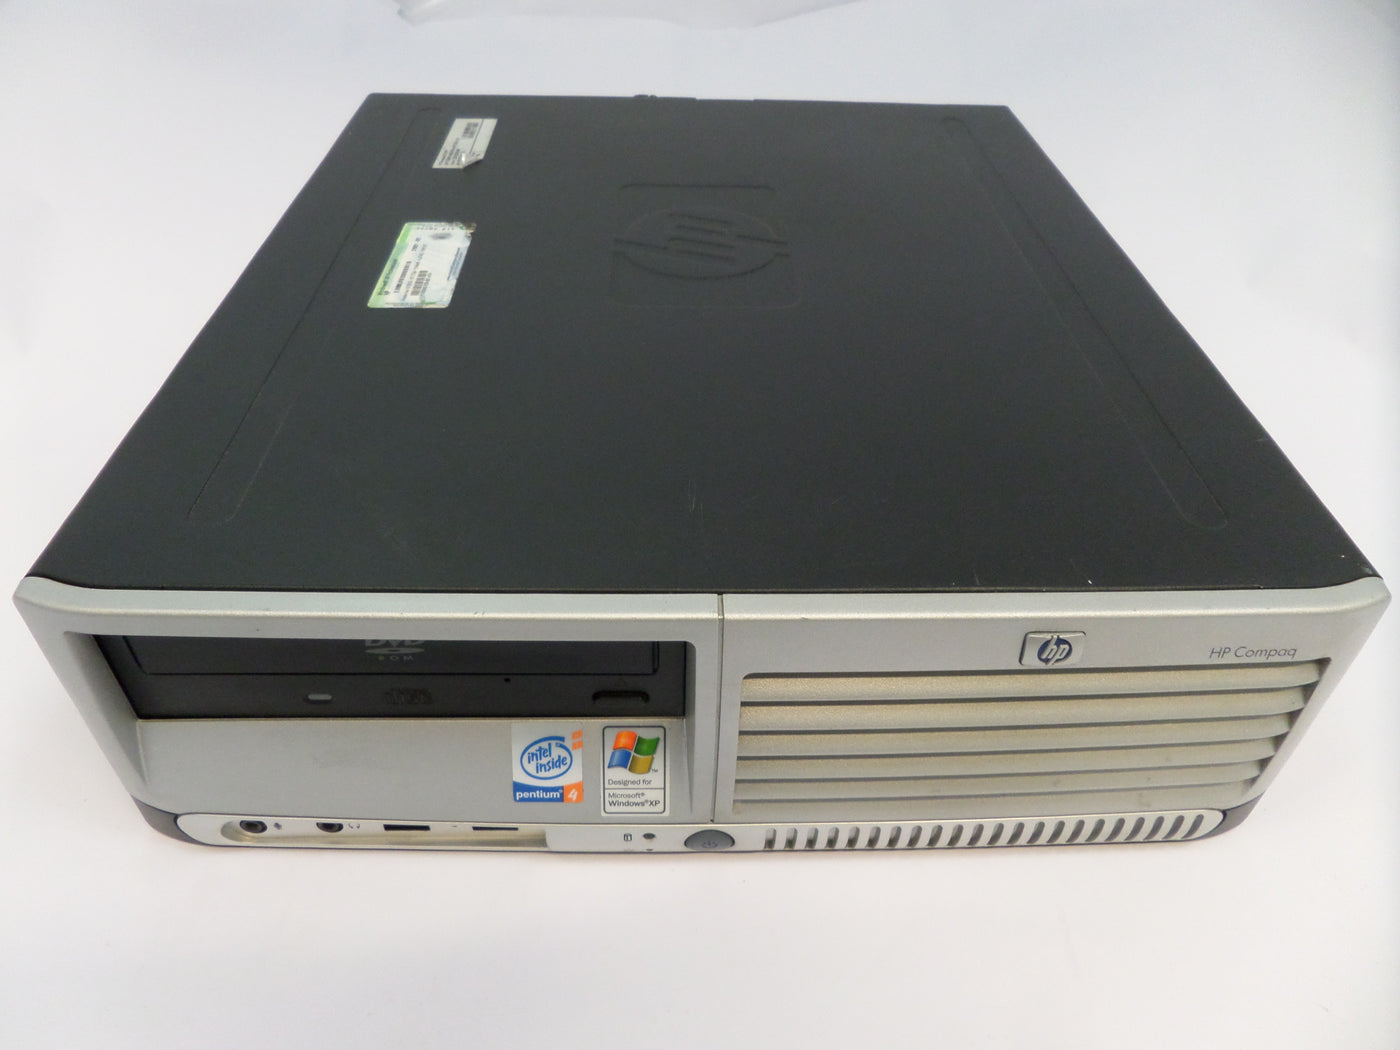 PC923A#ABU - HP Compaq dc7100 Intel P4 3GHz 1Gb RAM CD/DVD-ROM Small Form Factor - No HDD - USED